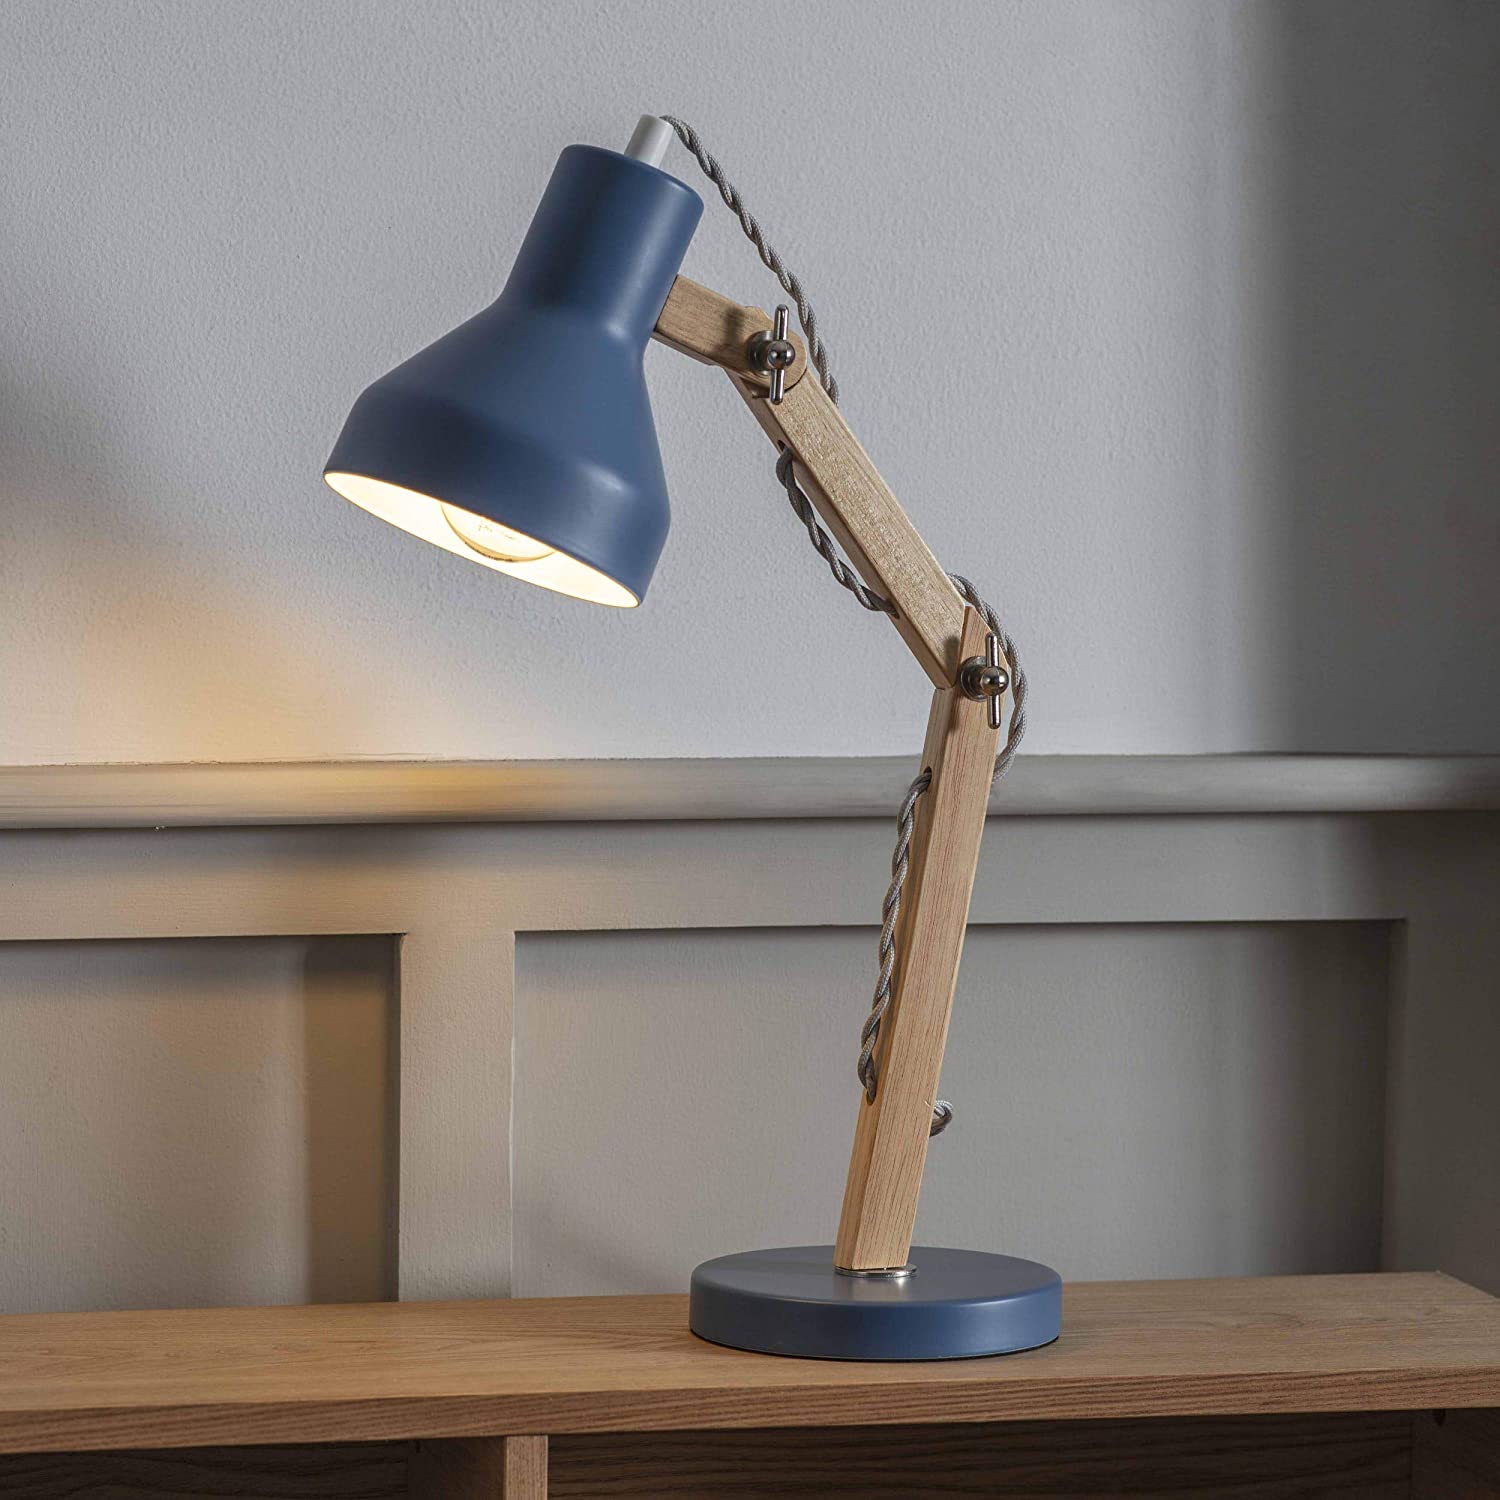 Blue Desk Lamp Bedside Reading Light, Bedside Table Lamp With Reading Arm